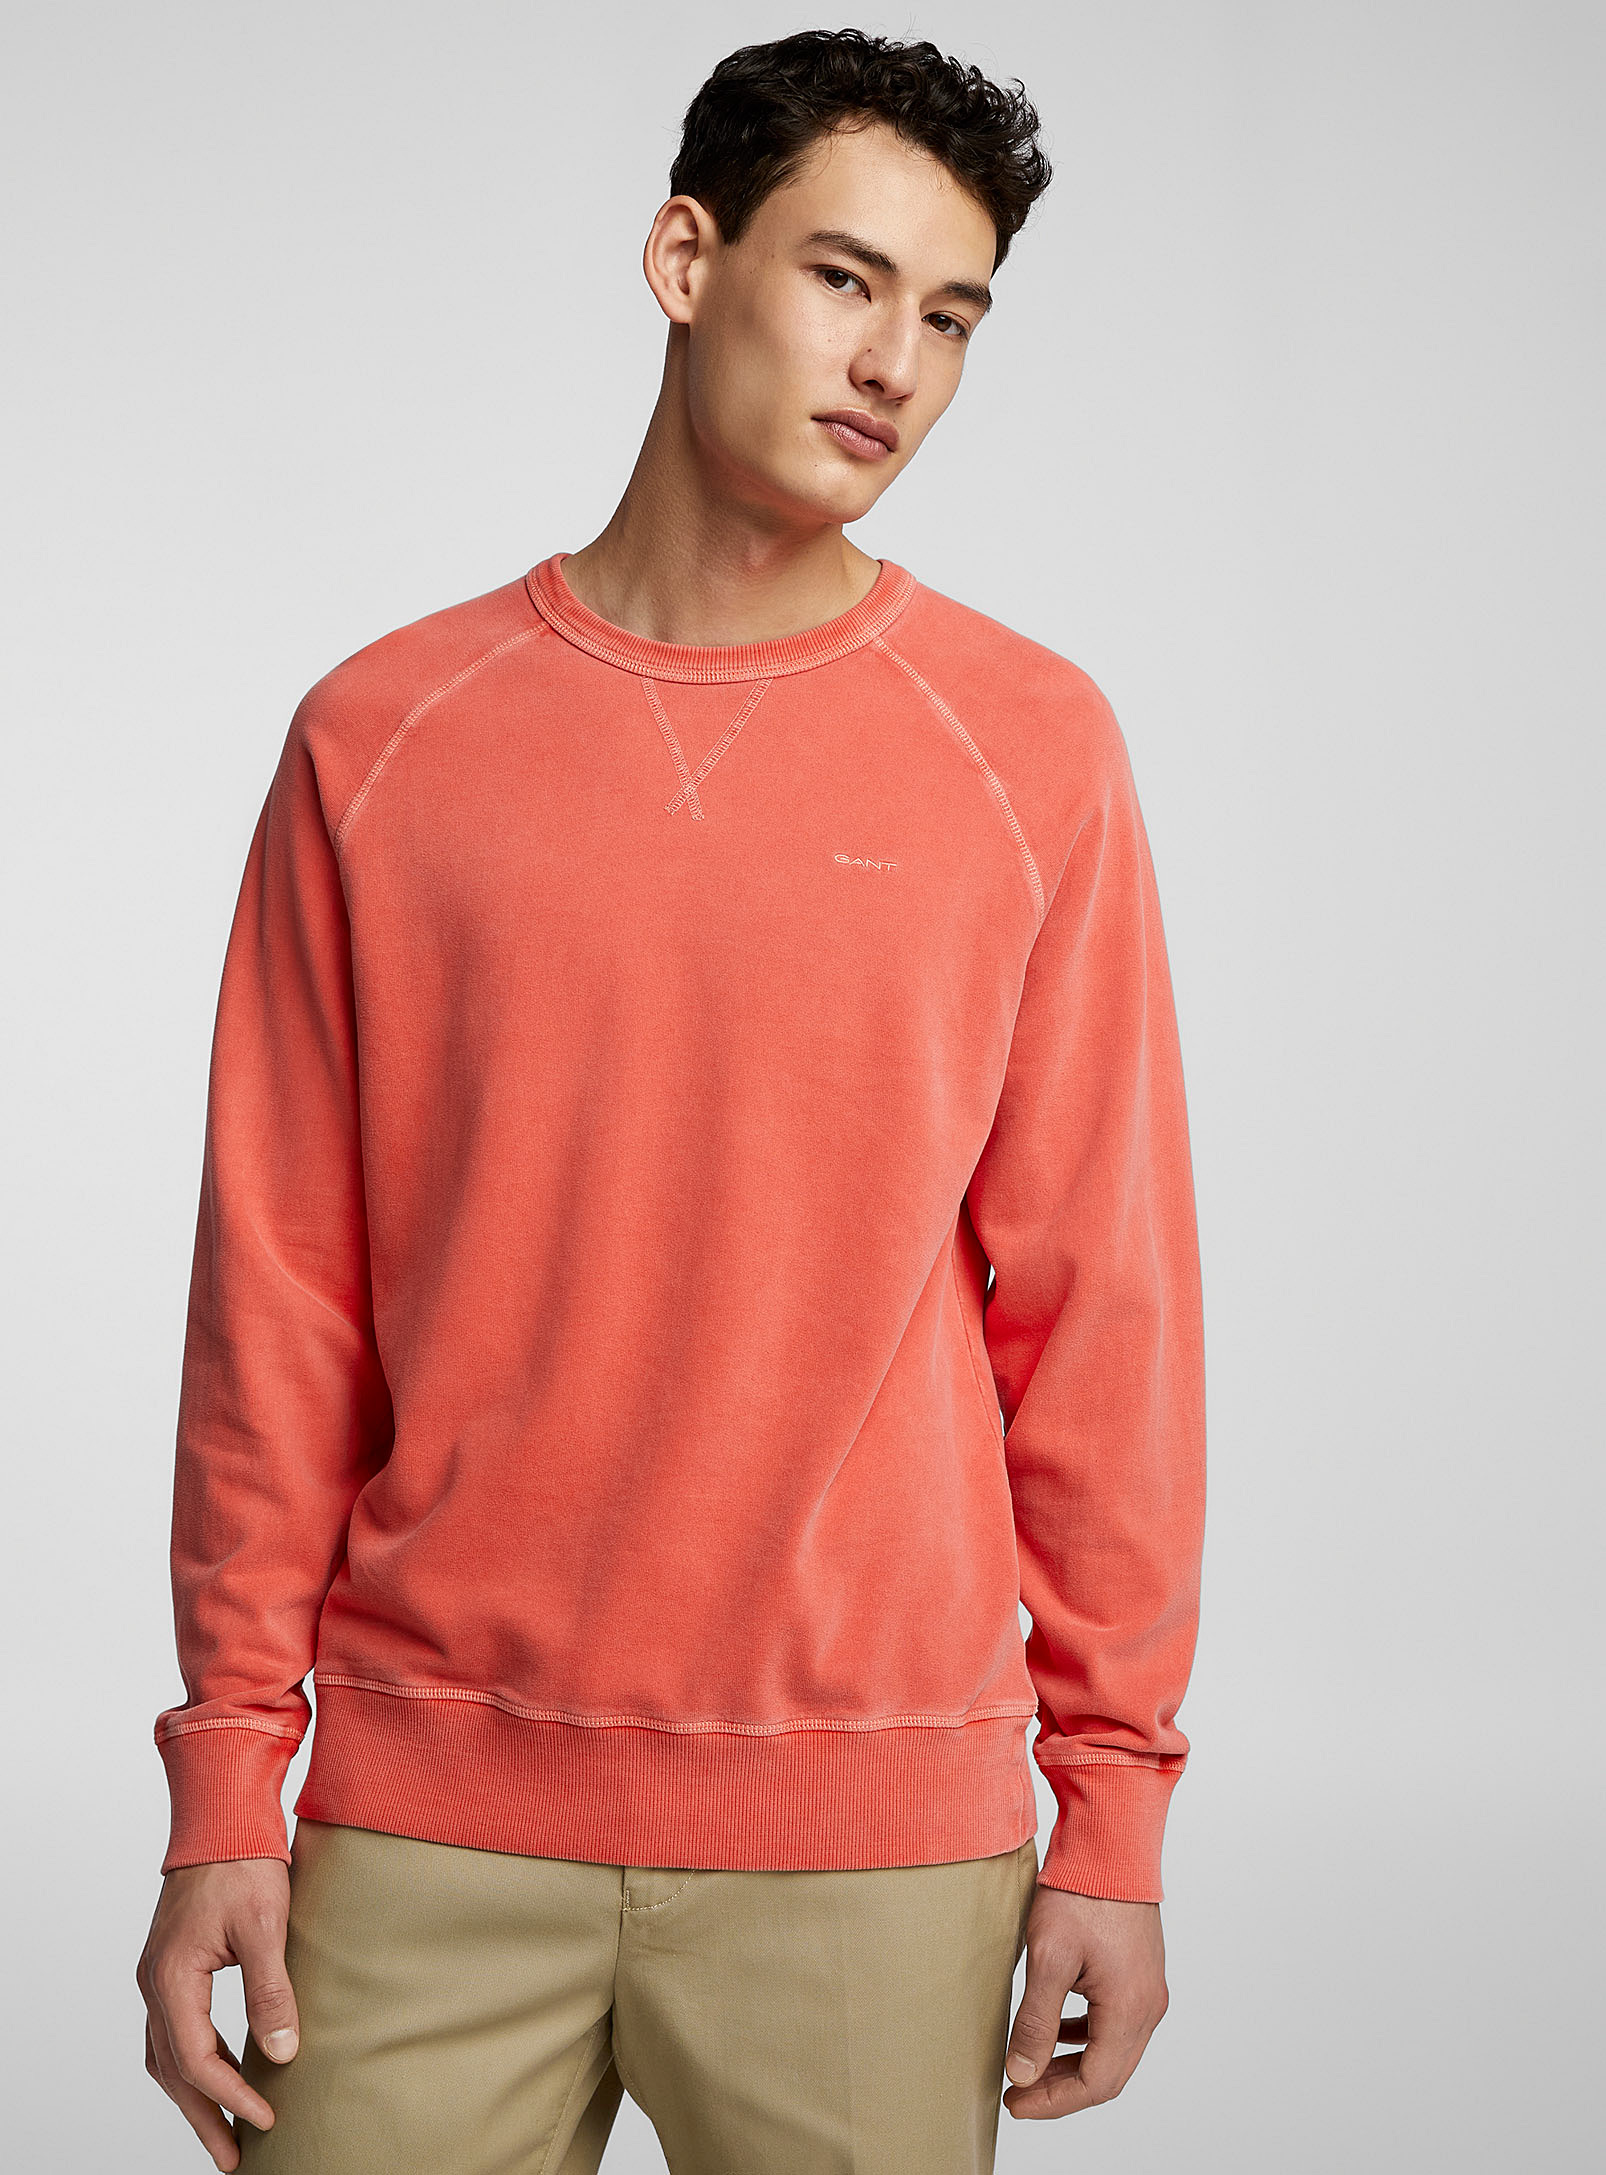 GANT - Men's Muted colour sweatshirt